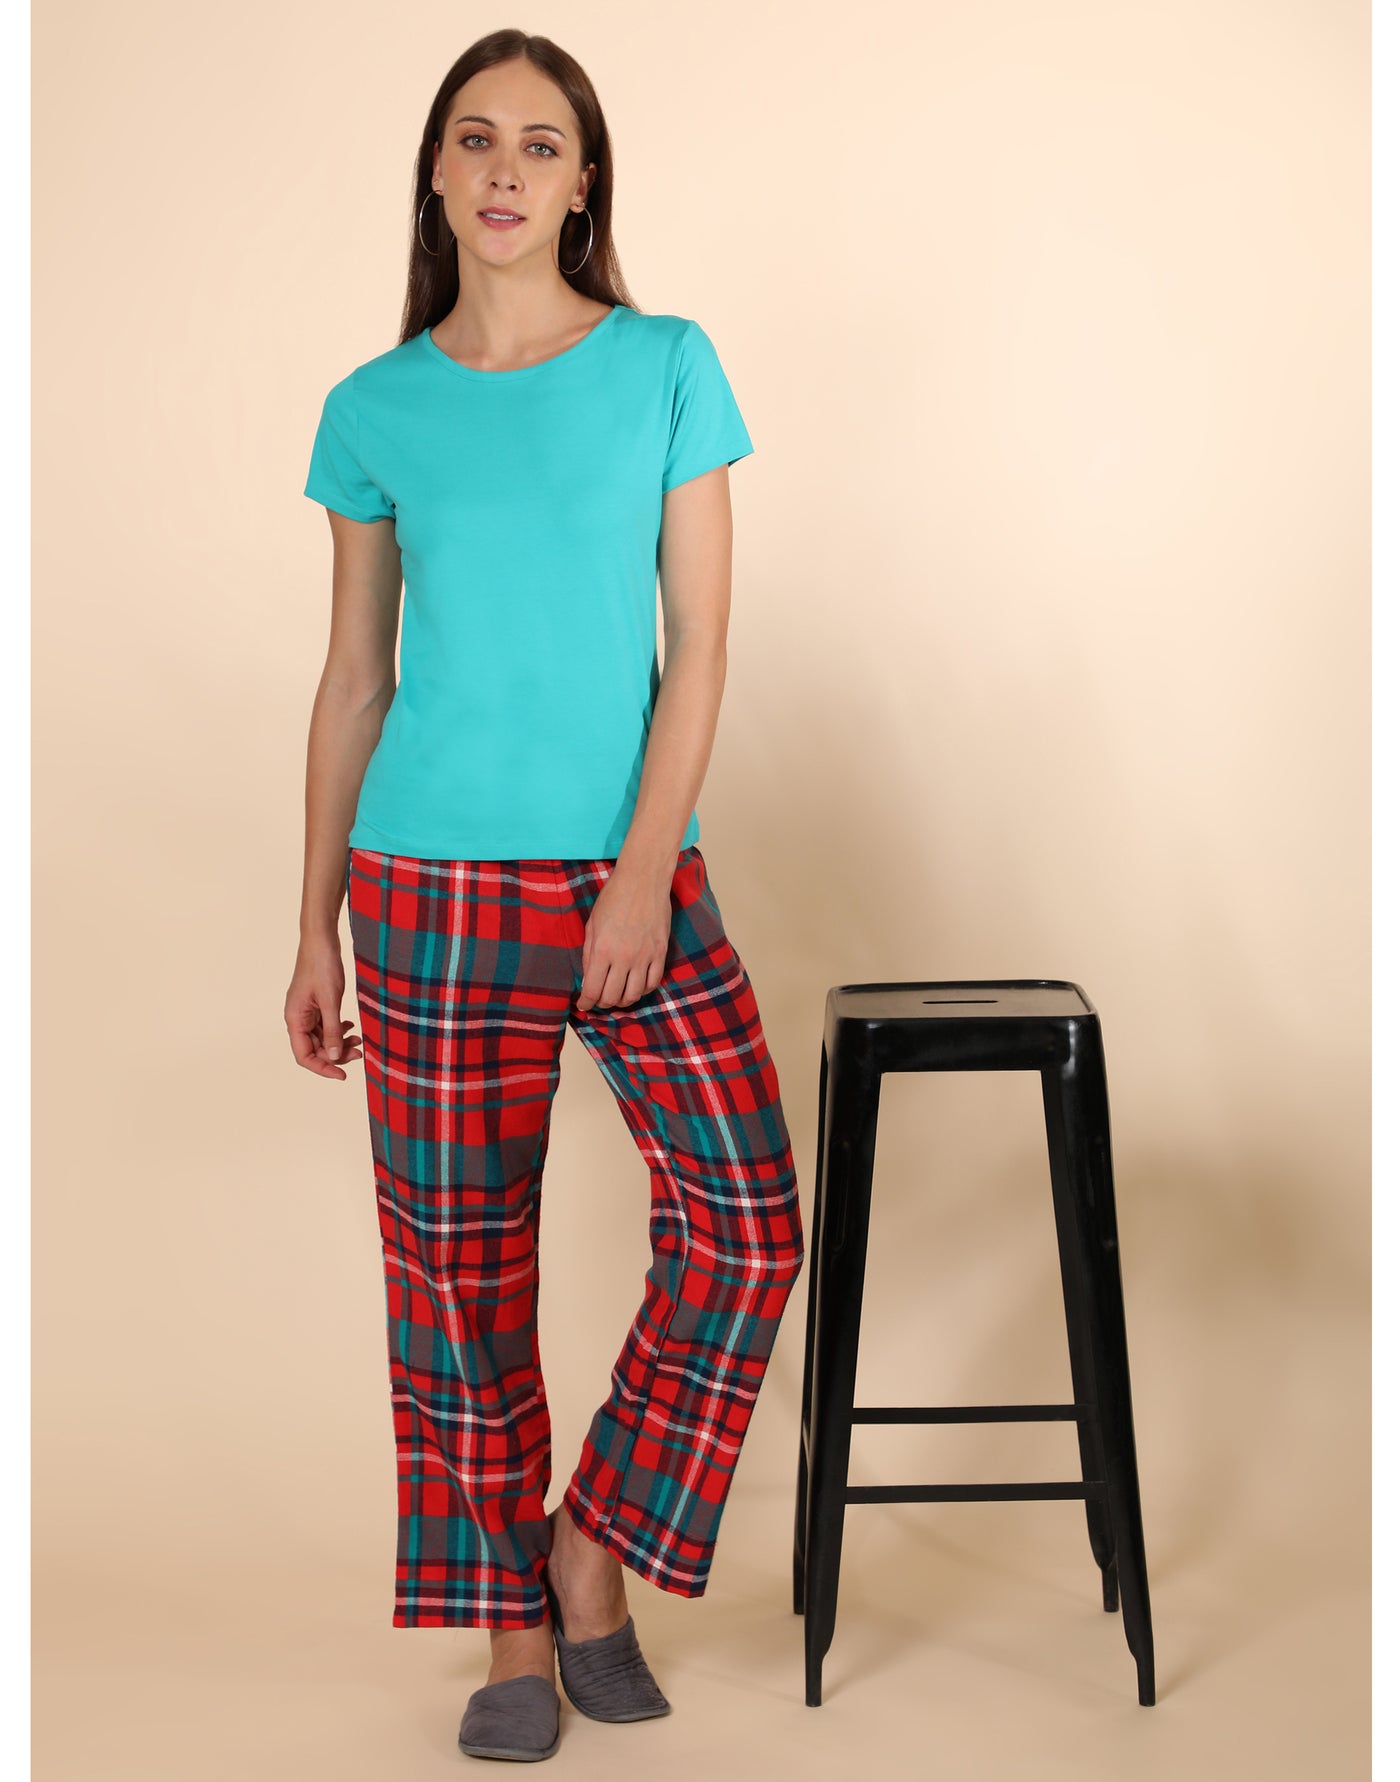 Pyjama Set for Women-Green T-Shirt & Checked Pant